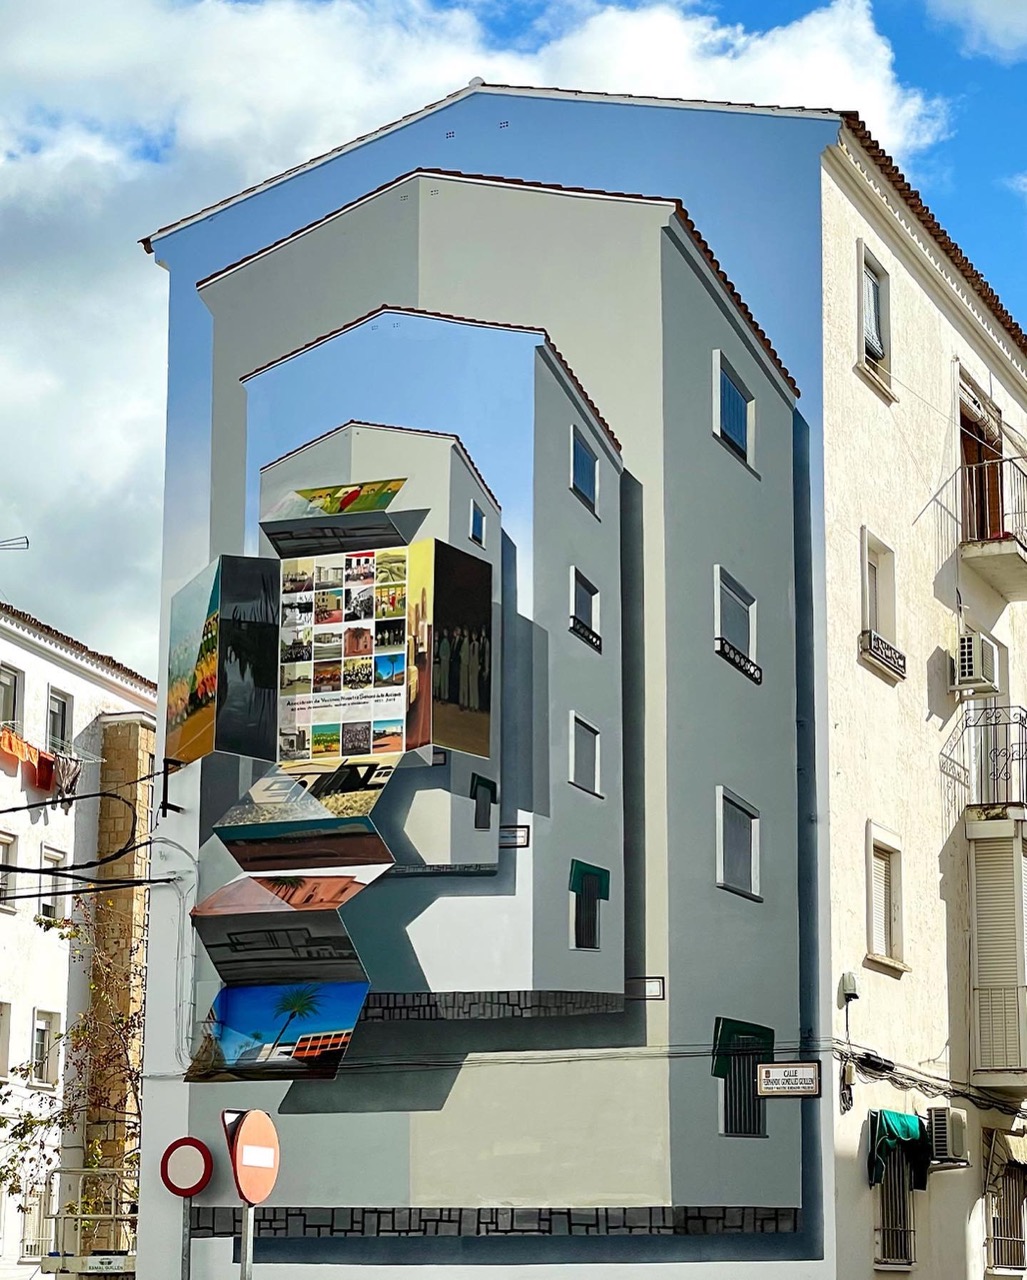 “Al Ultimate Todo se Scale back a Esto” a Mural by Spok Brillor in Mérida, Mexico – StreetArtNews